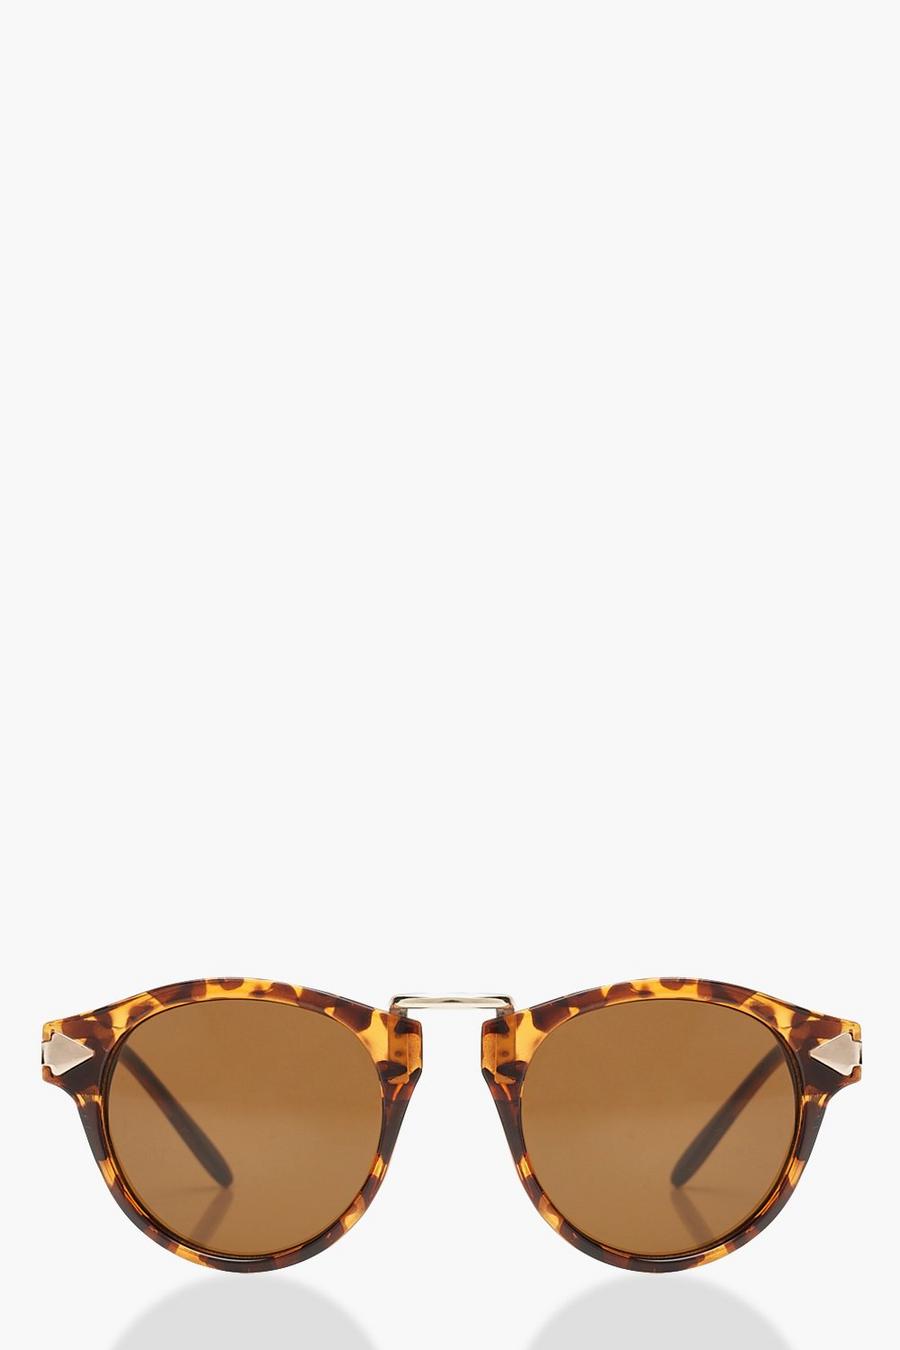 Brown Tortoiseshell Contrast Round Sunglasses image number 1